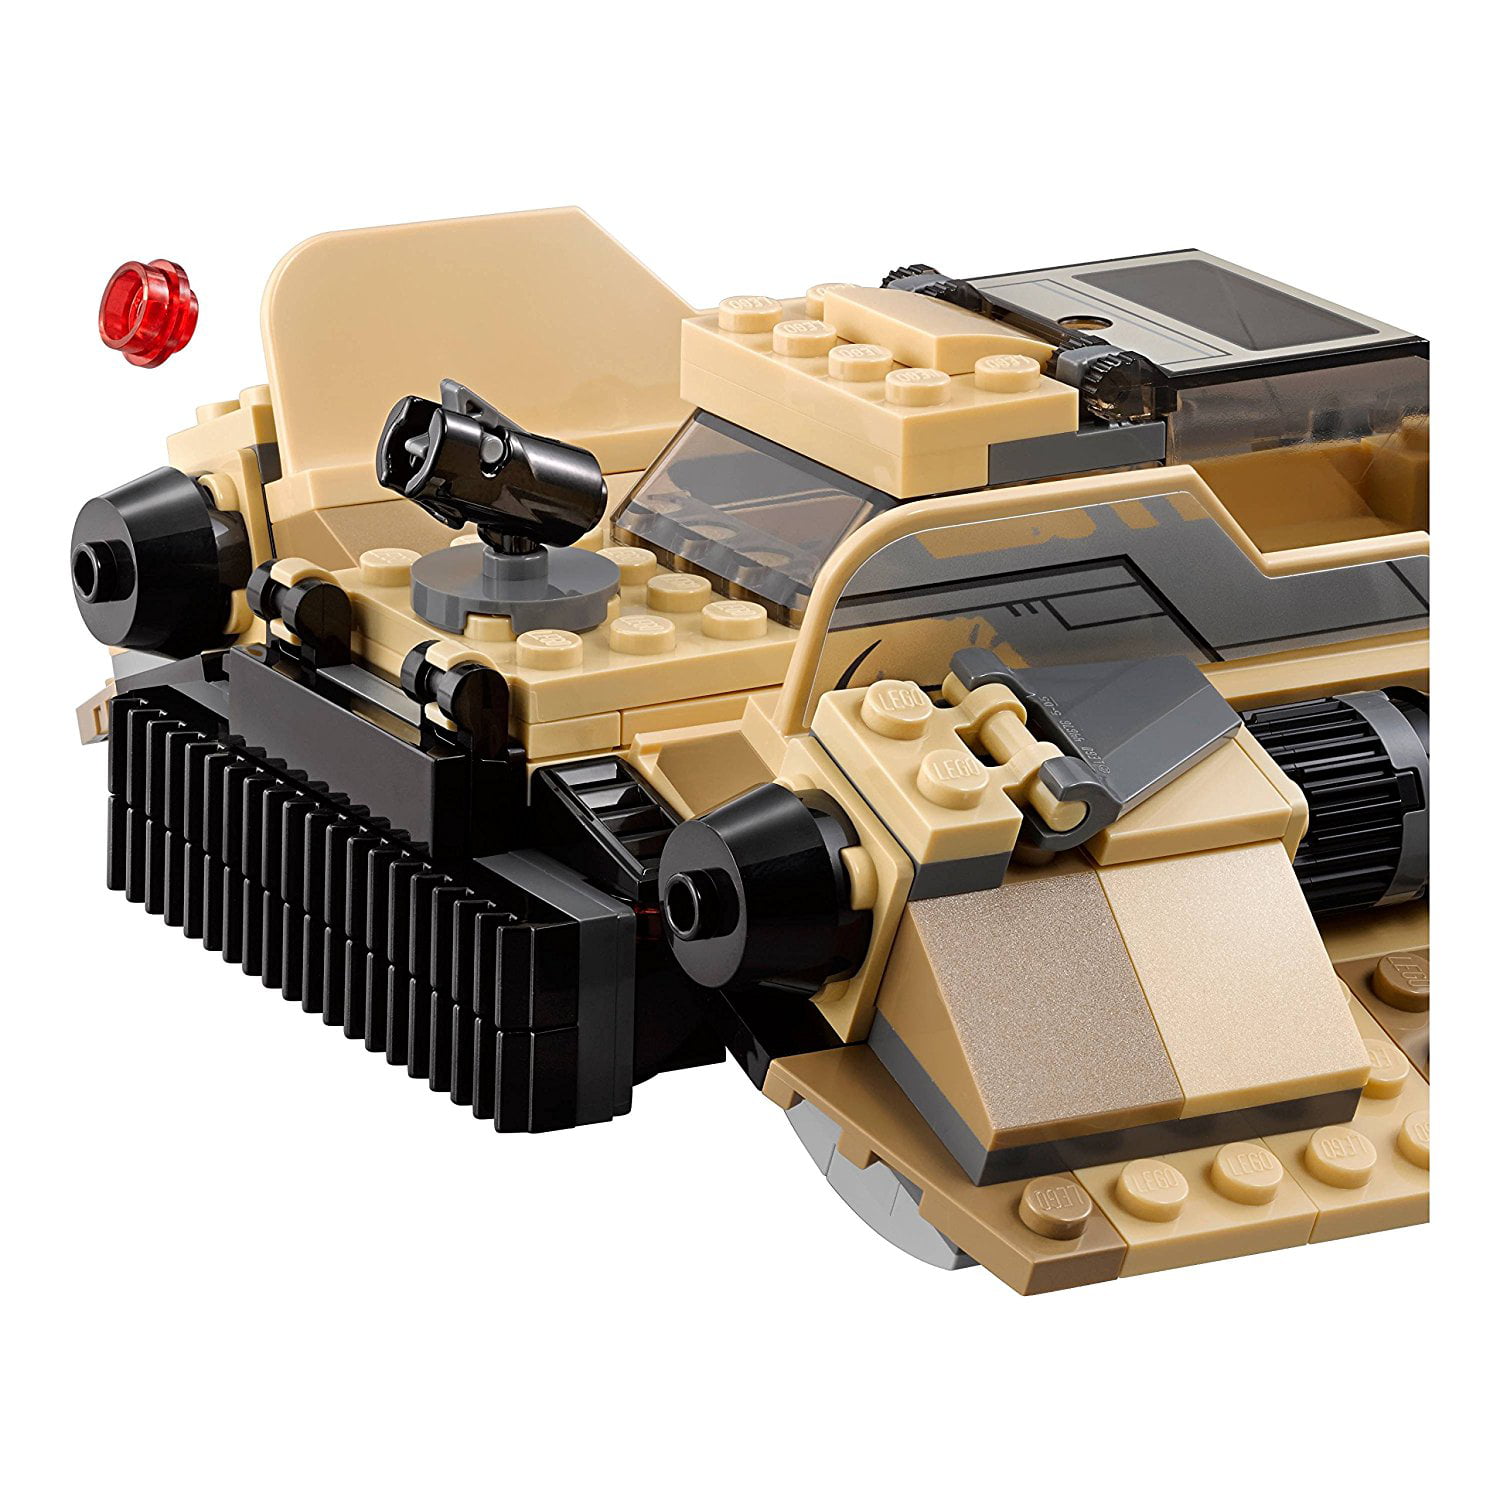 LEGO Star Wars 75204 Sandspeeder - Walmart.com